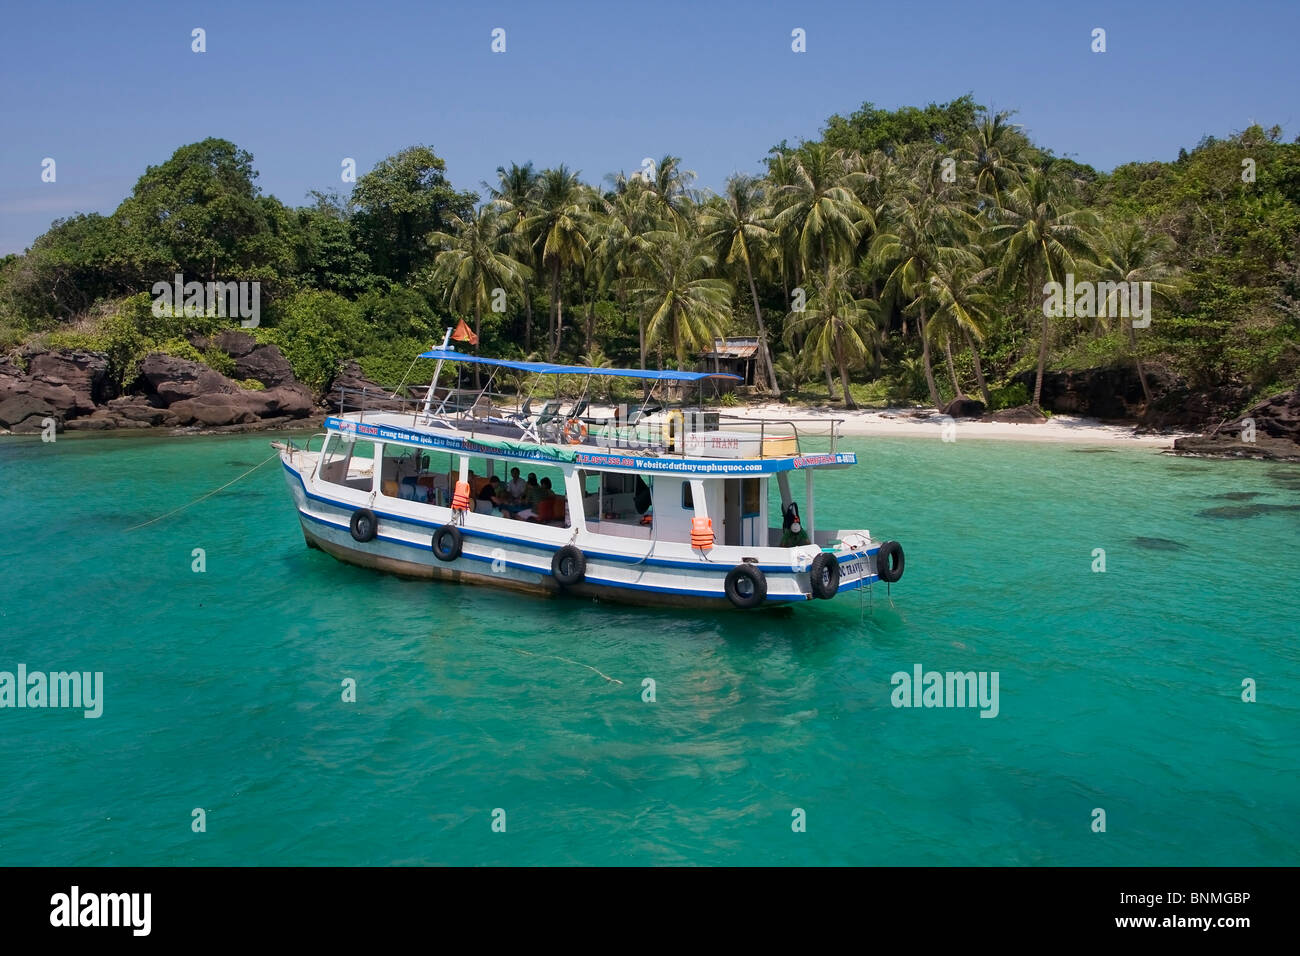 Ambiente de playa ambiente dream dream-like isla de vacaciones celestial como larga piscina palm Phu Quoc arenosos de Asia Sudoriental Foto de stock